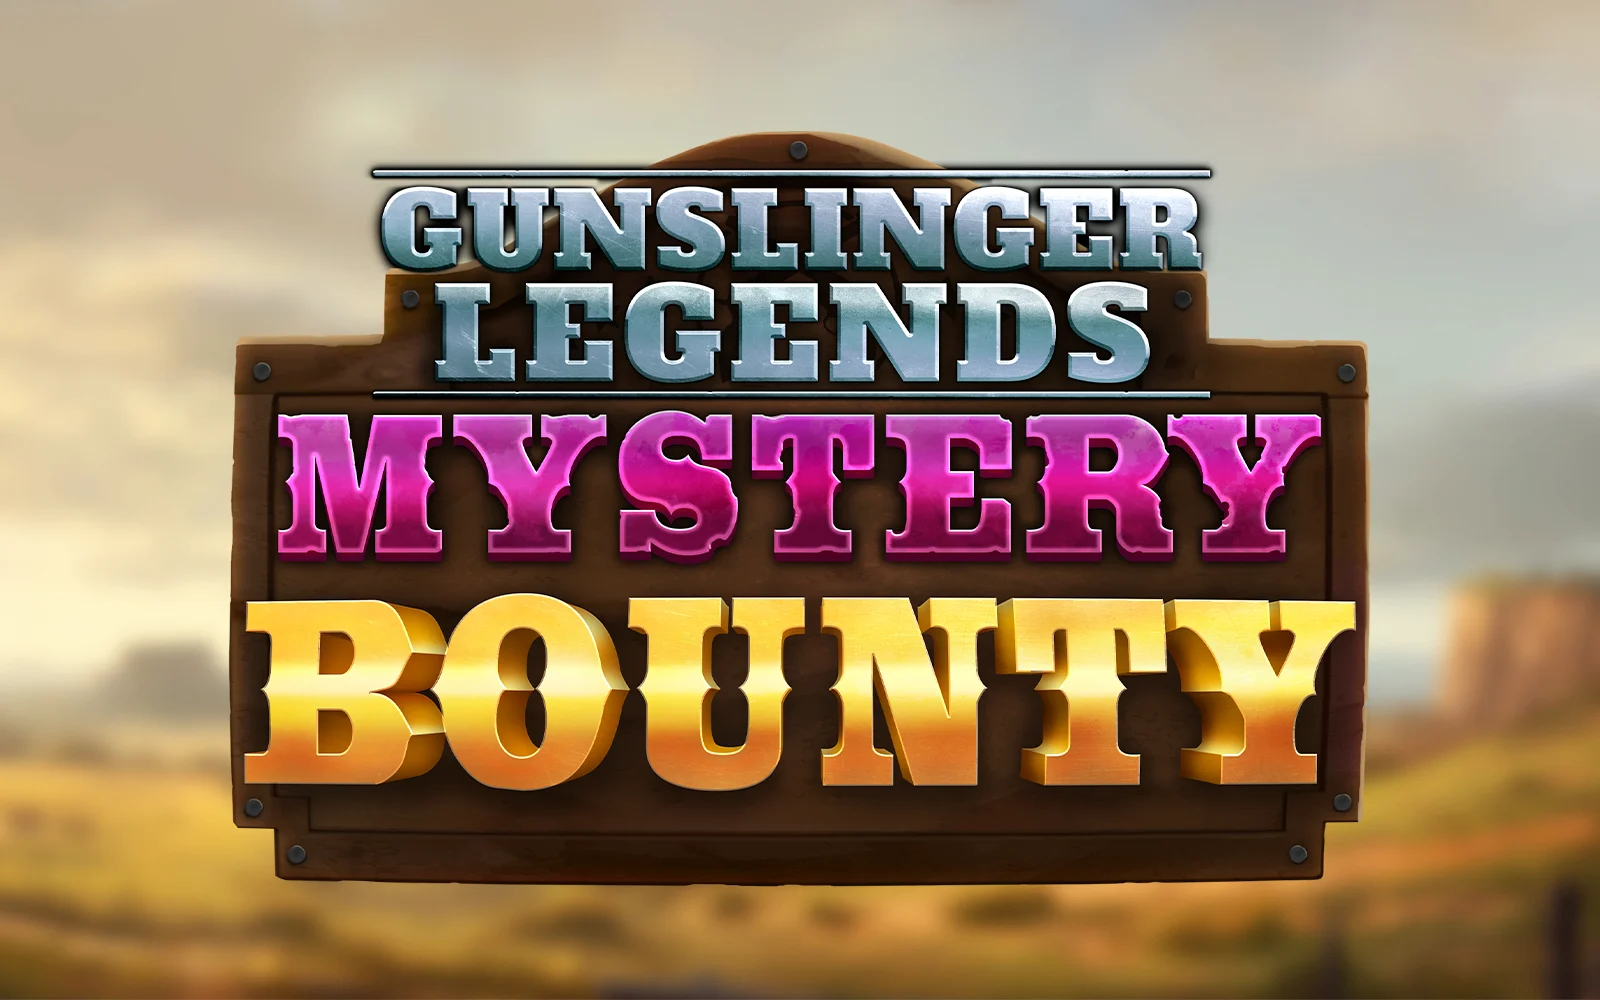 Jogue Gunslinger Legends Mystery Bounty no casino online Starcasino.be 